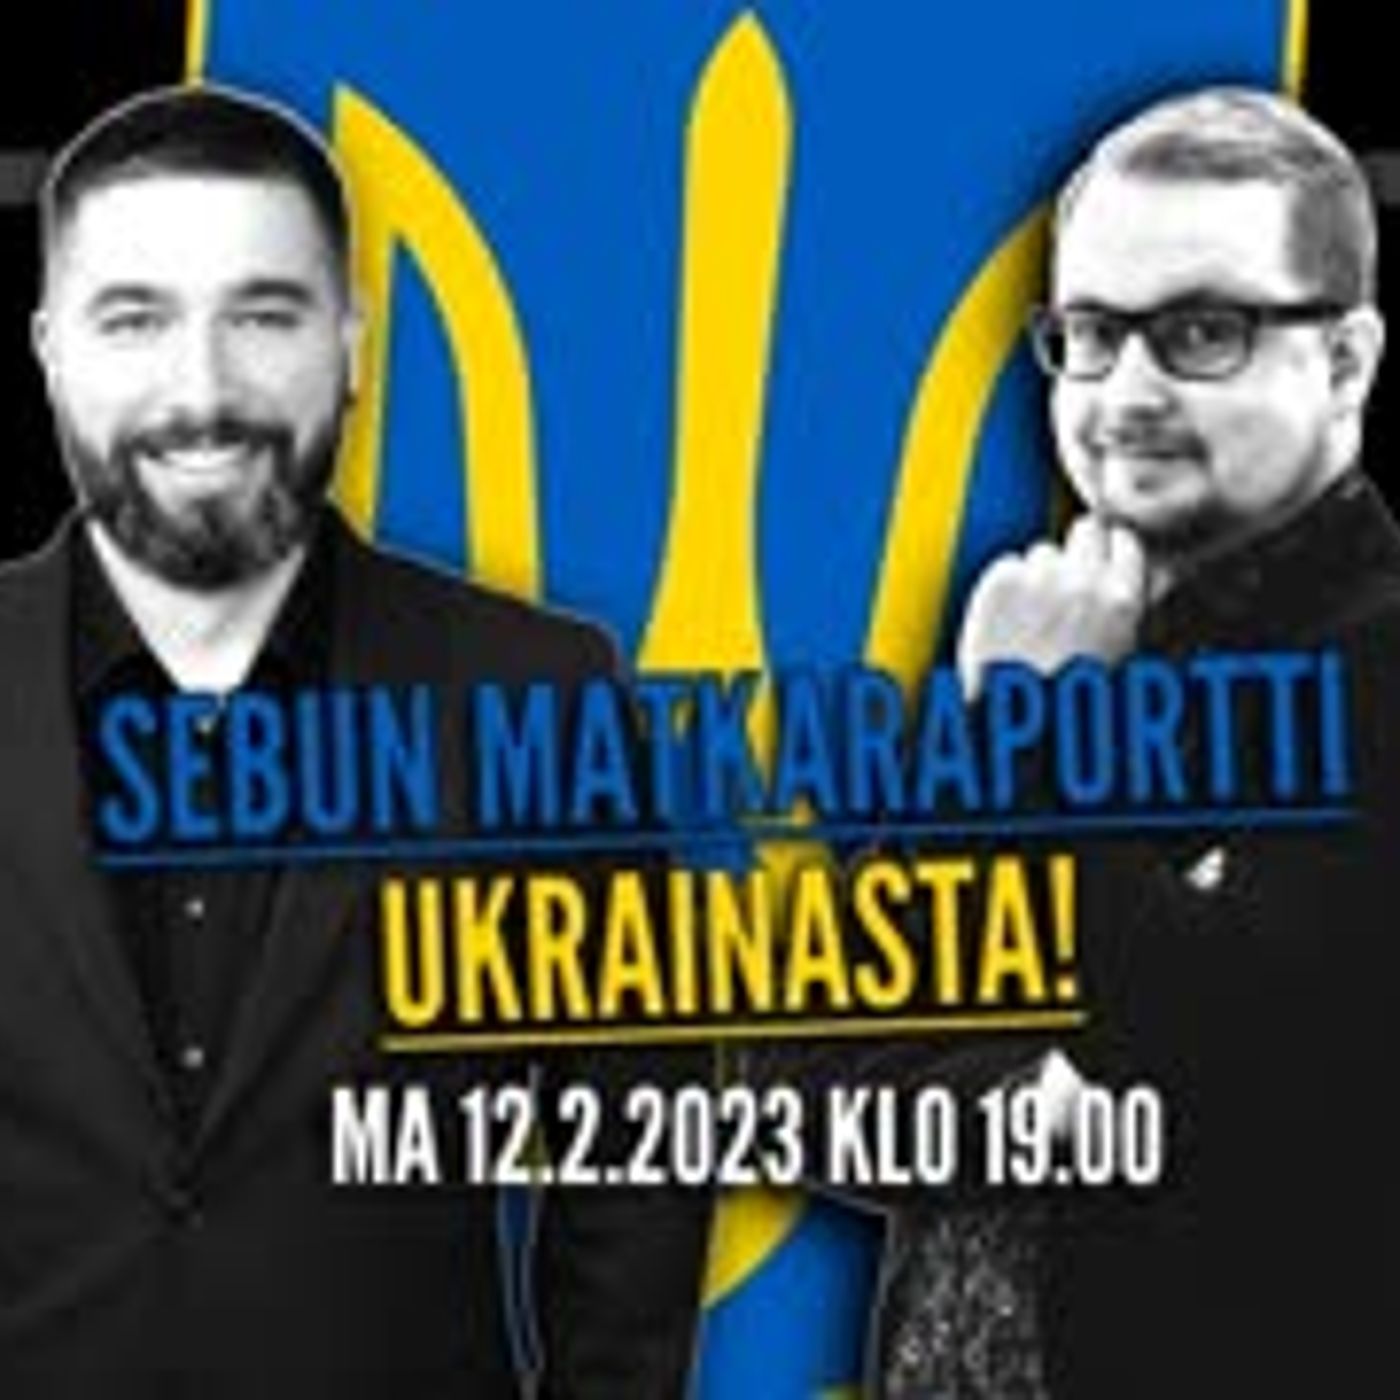 Sebun matkaraportti livenä Ukrainasta! - Pro Patria Suomi-Ukraina